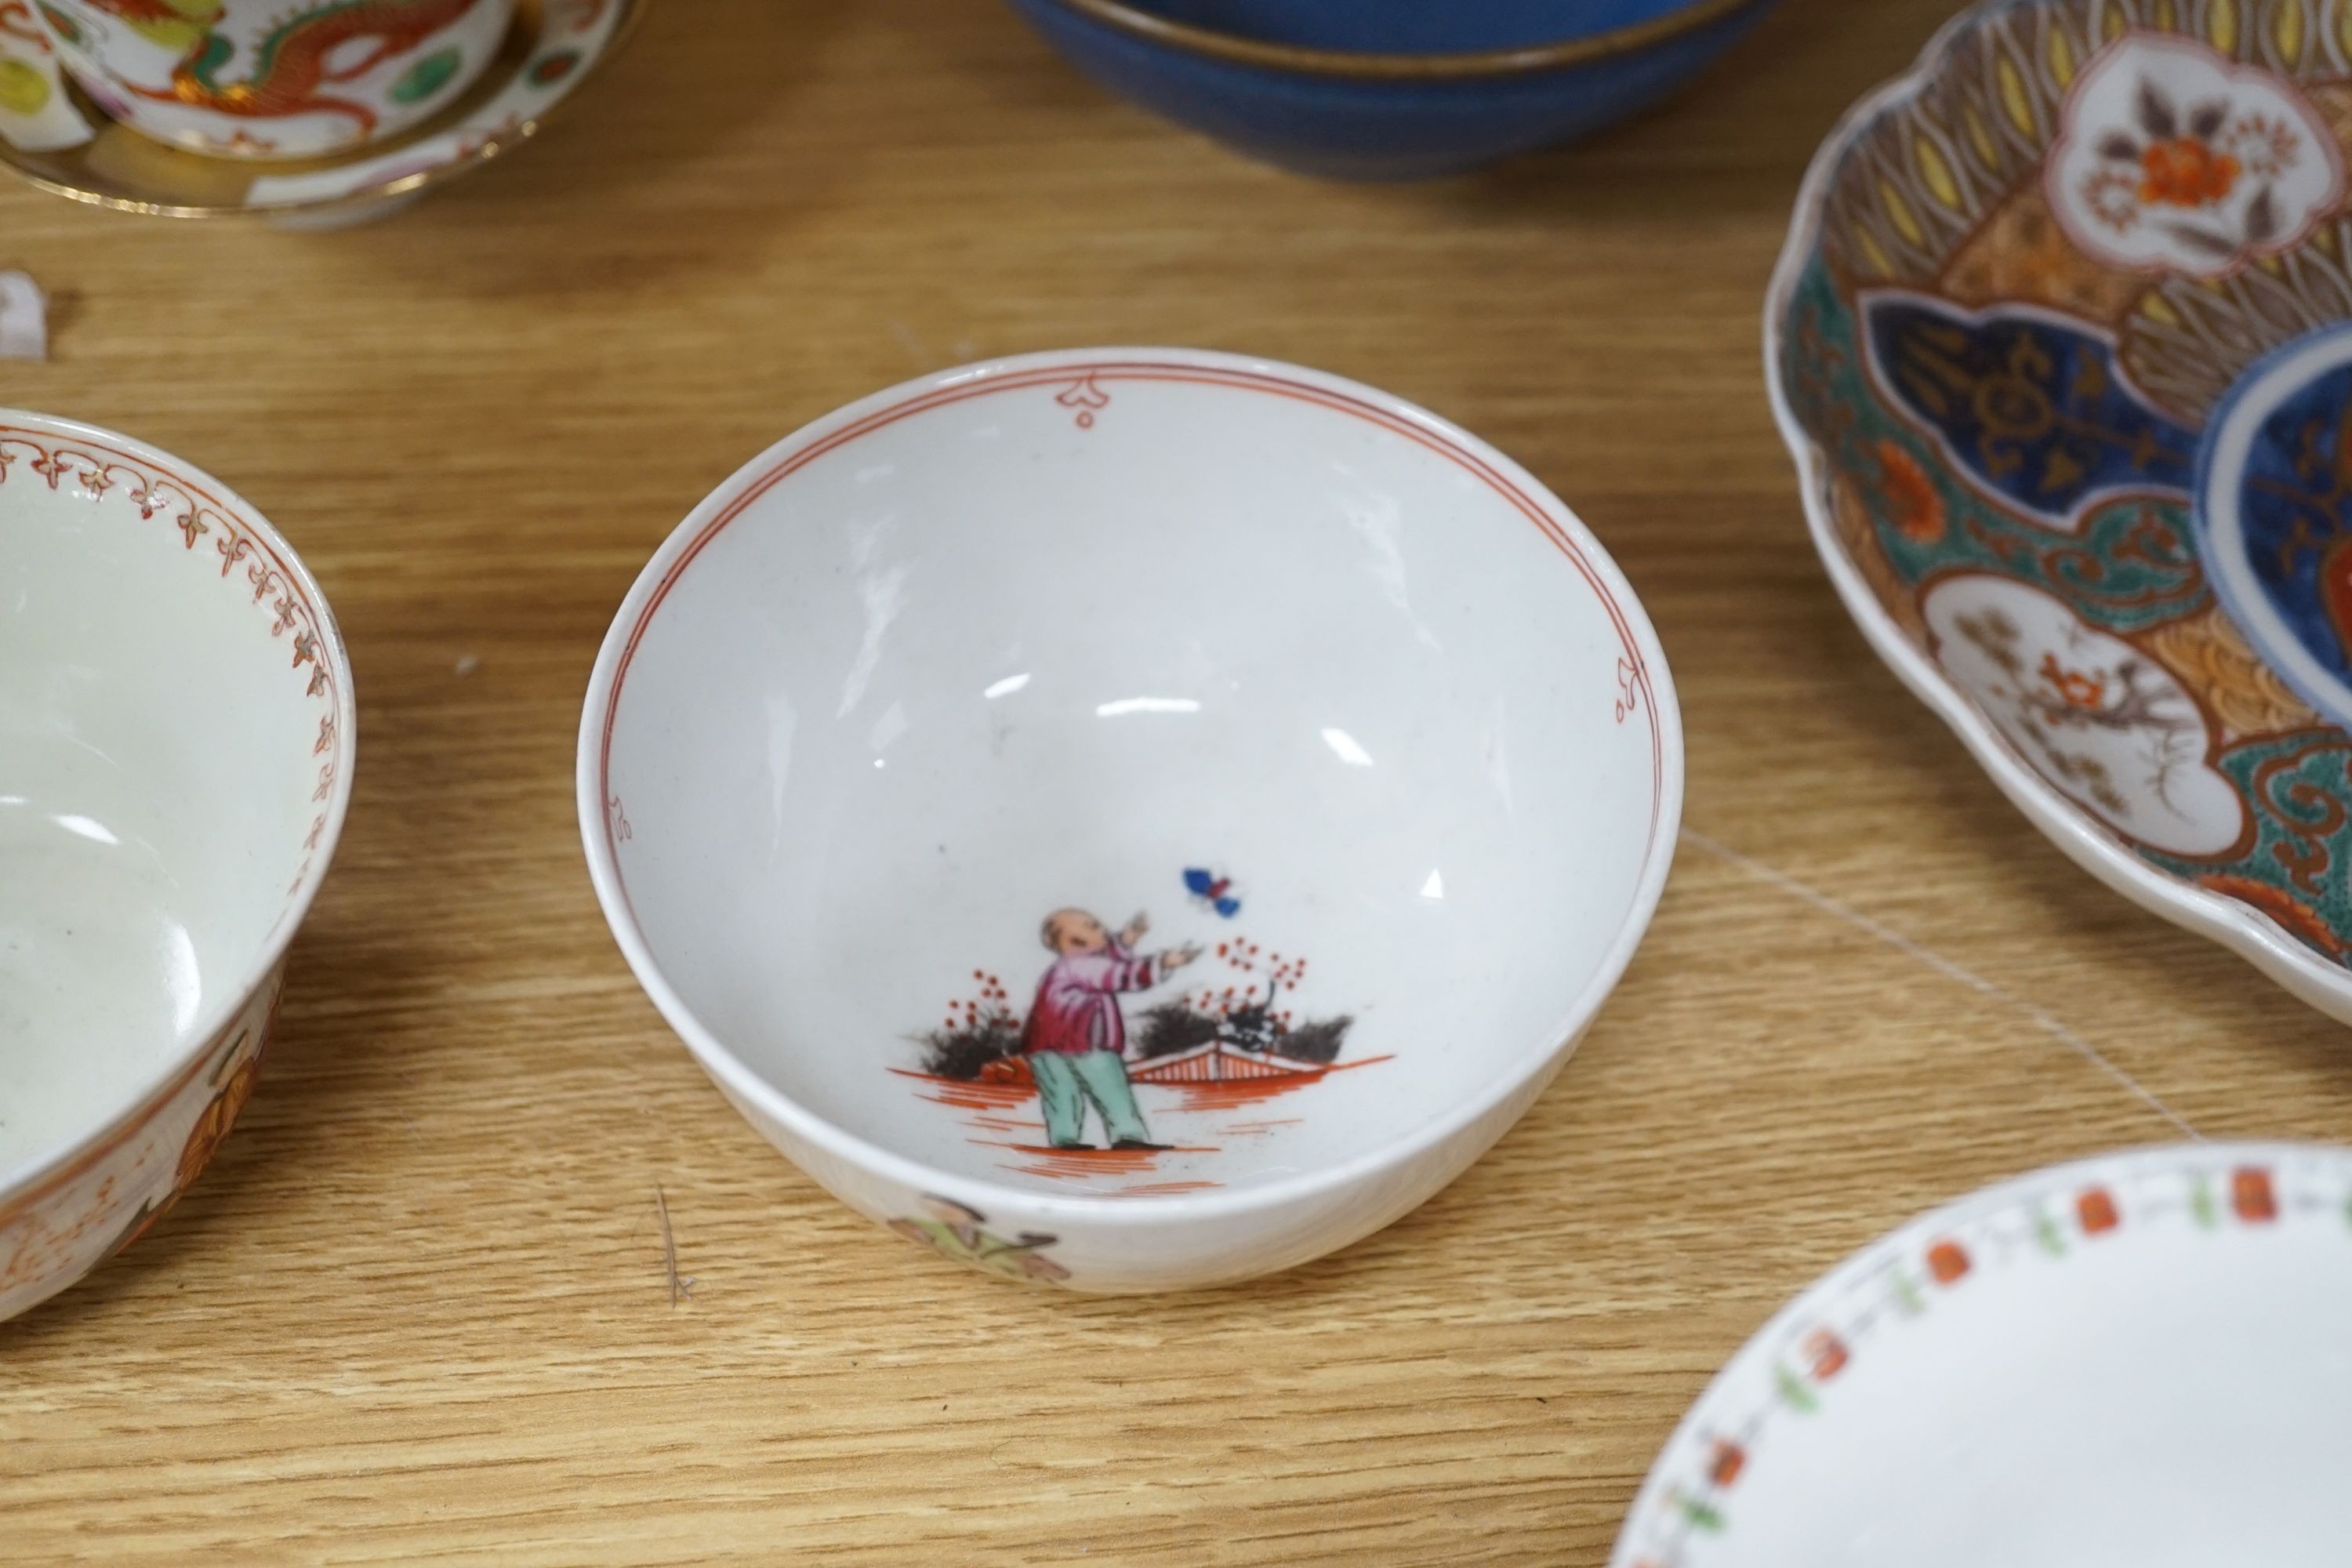 A mixed group pf Chinese, Japanese and English ceramics